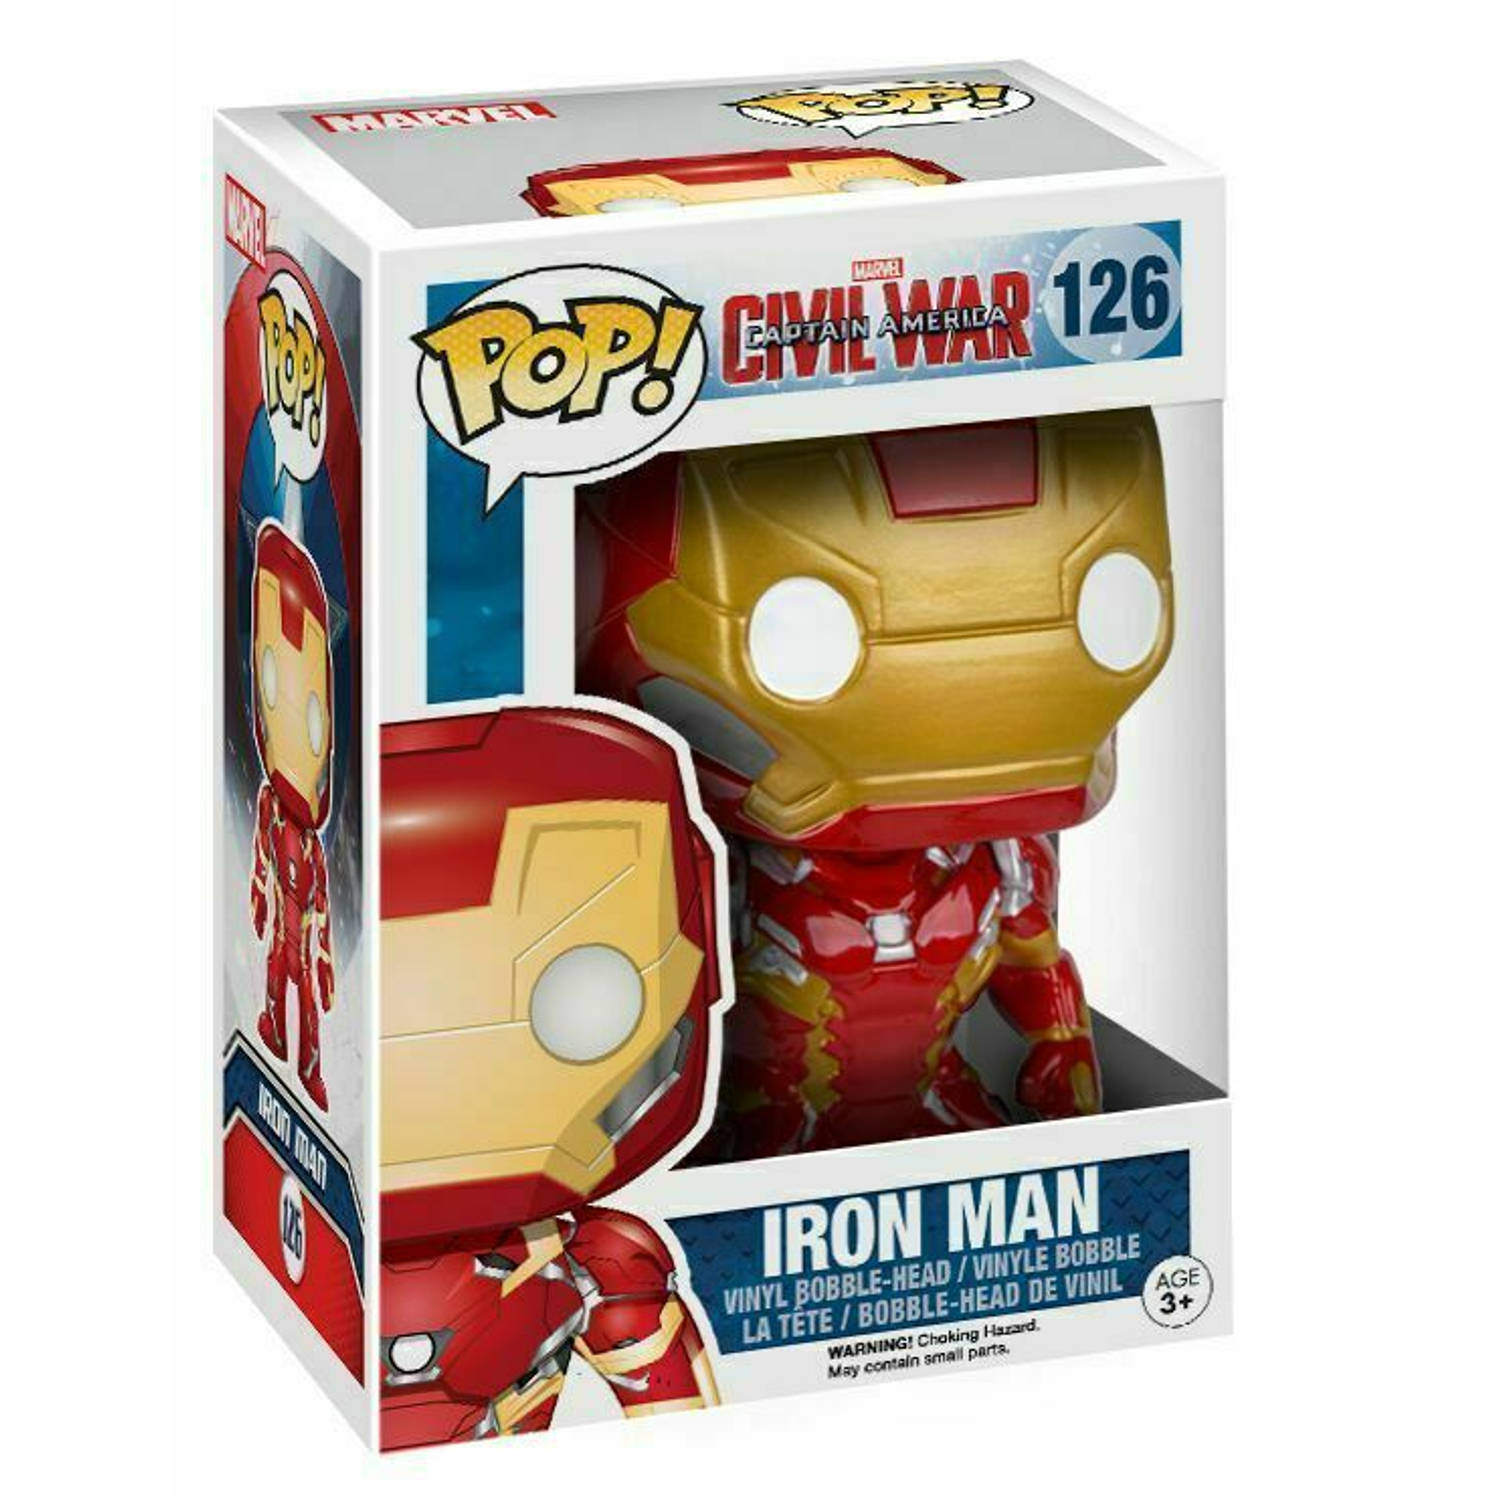 Marvel Captain America Civil War Iron Man Pop! Vinyl Figure